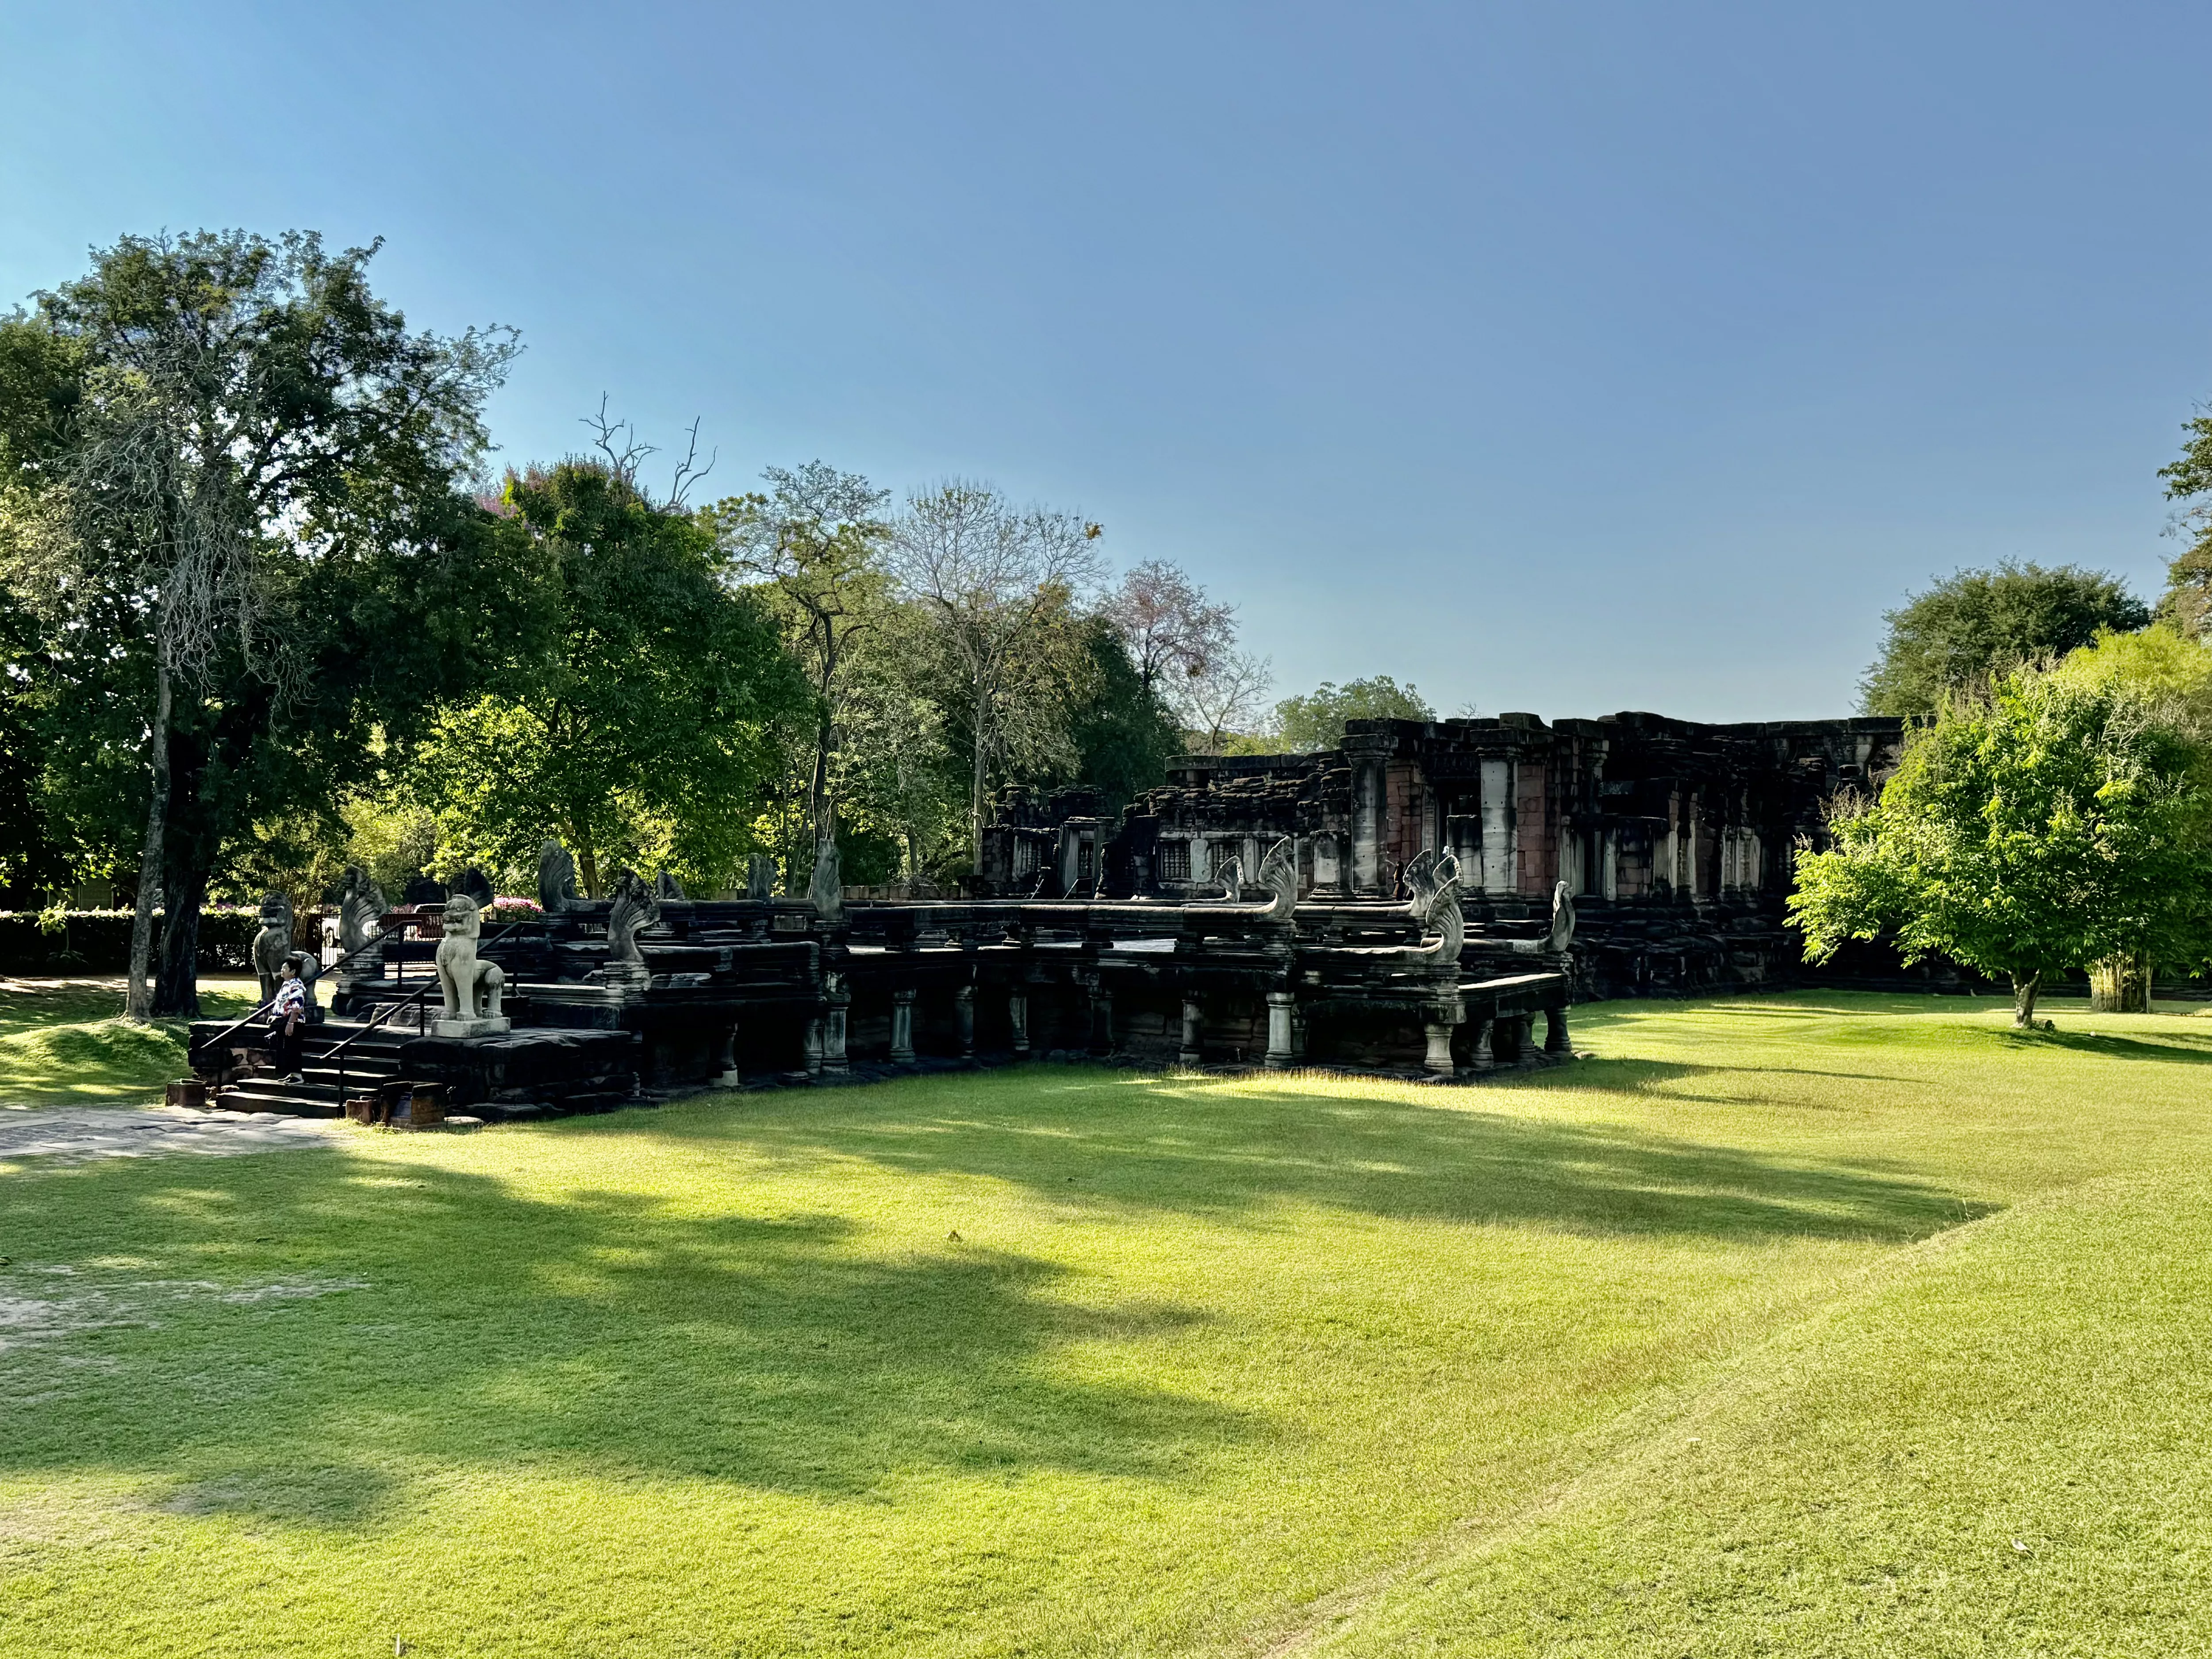 Phimai Historical Park, Nakhon Ratchasima, Thailand 